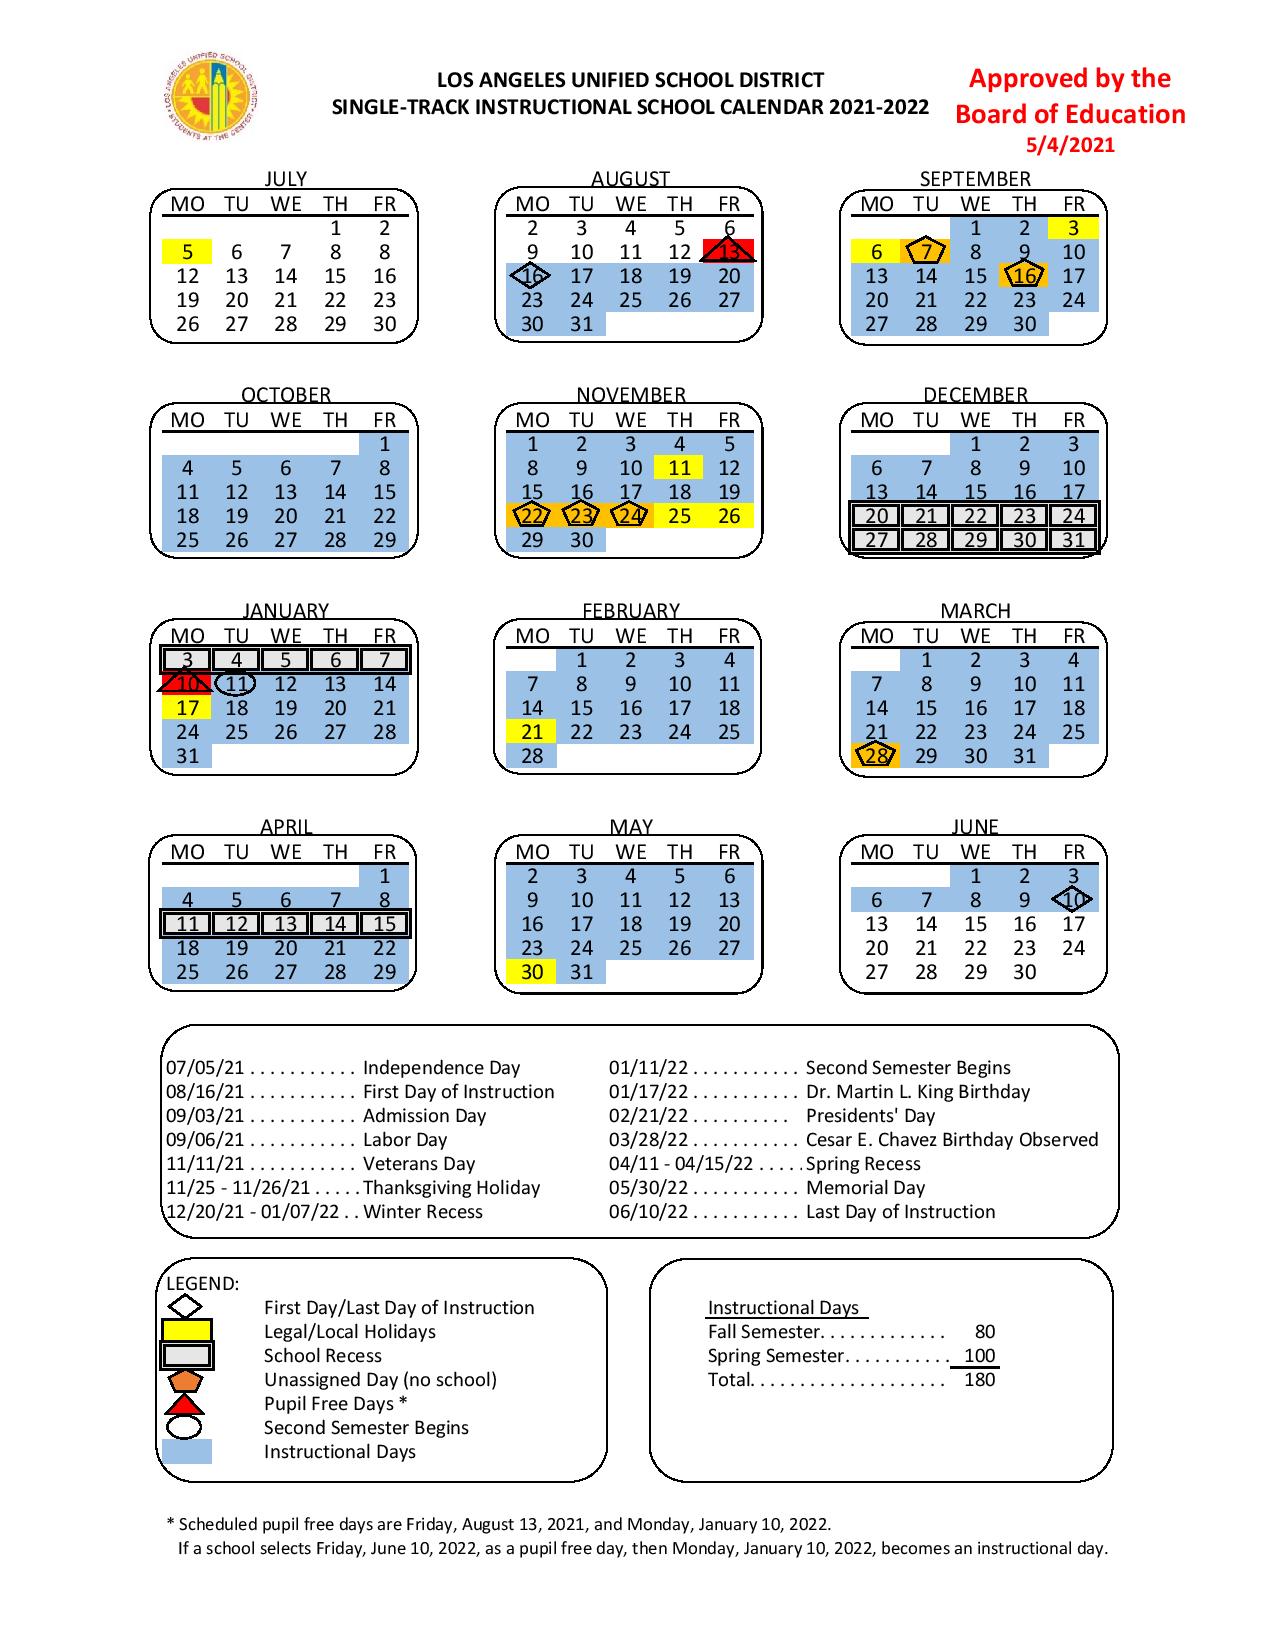 Los Angeles Unified School District Calendar 20212022